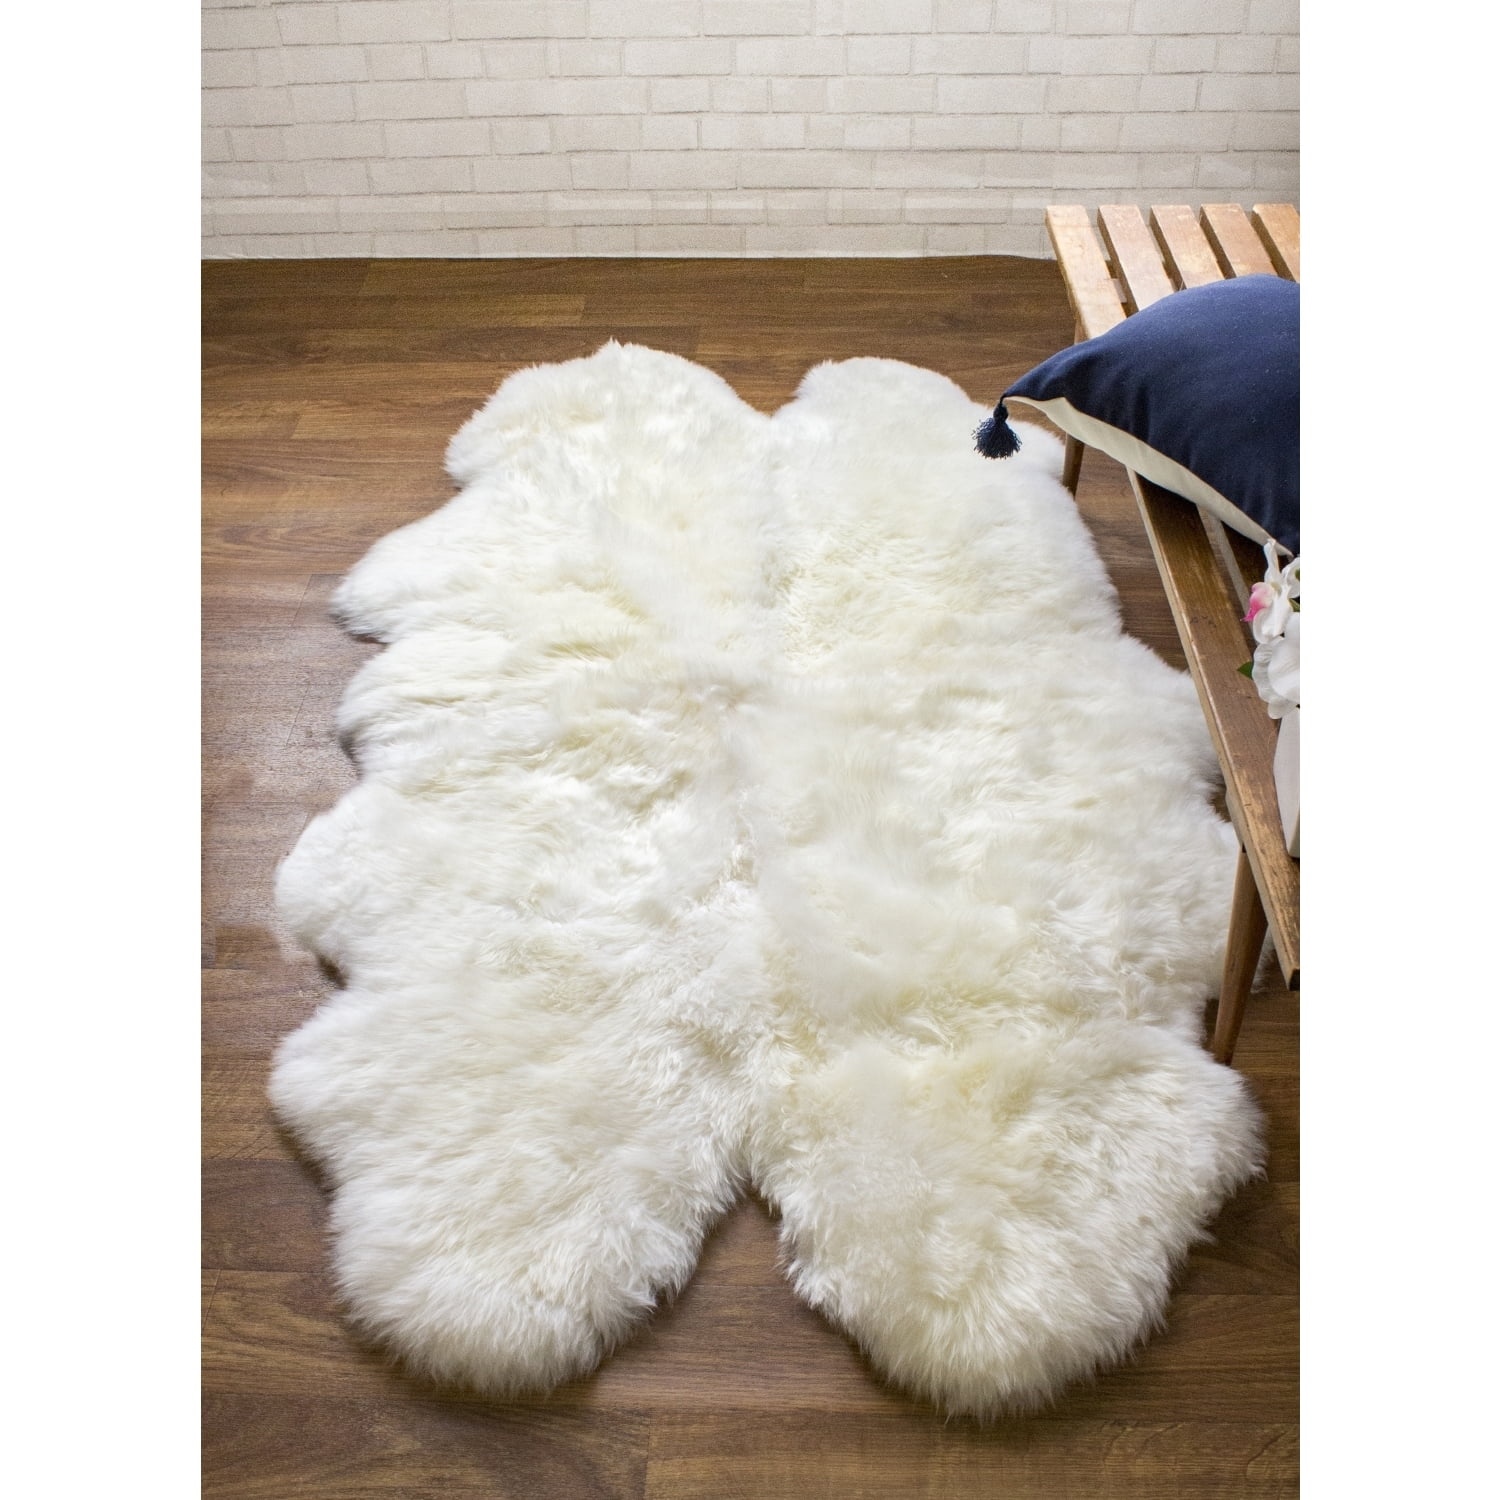 Sheepskin Furry Large Gorgeousl Real Australian Auskin Rug Cream White Sheep Fur 